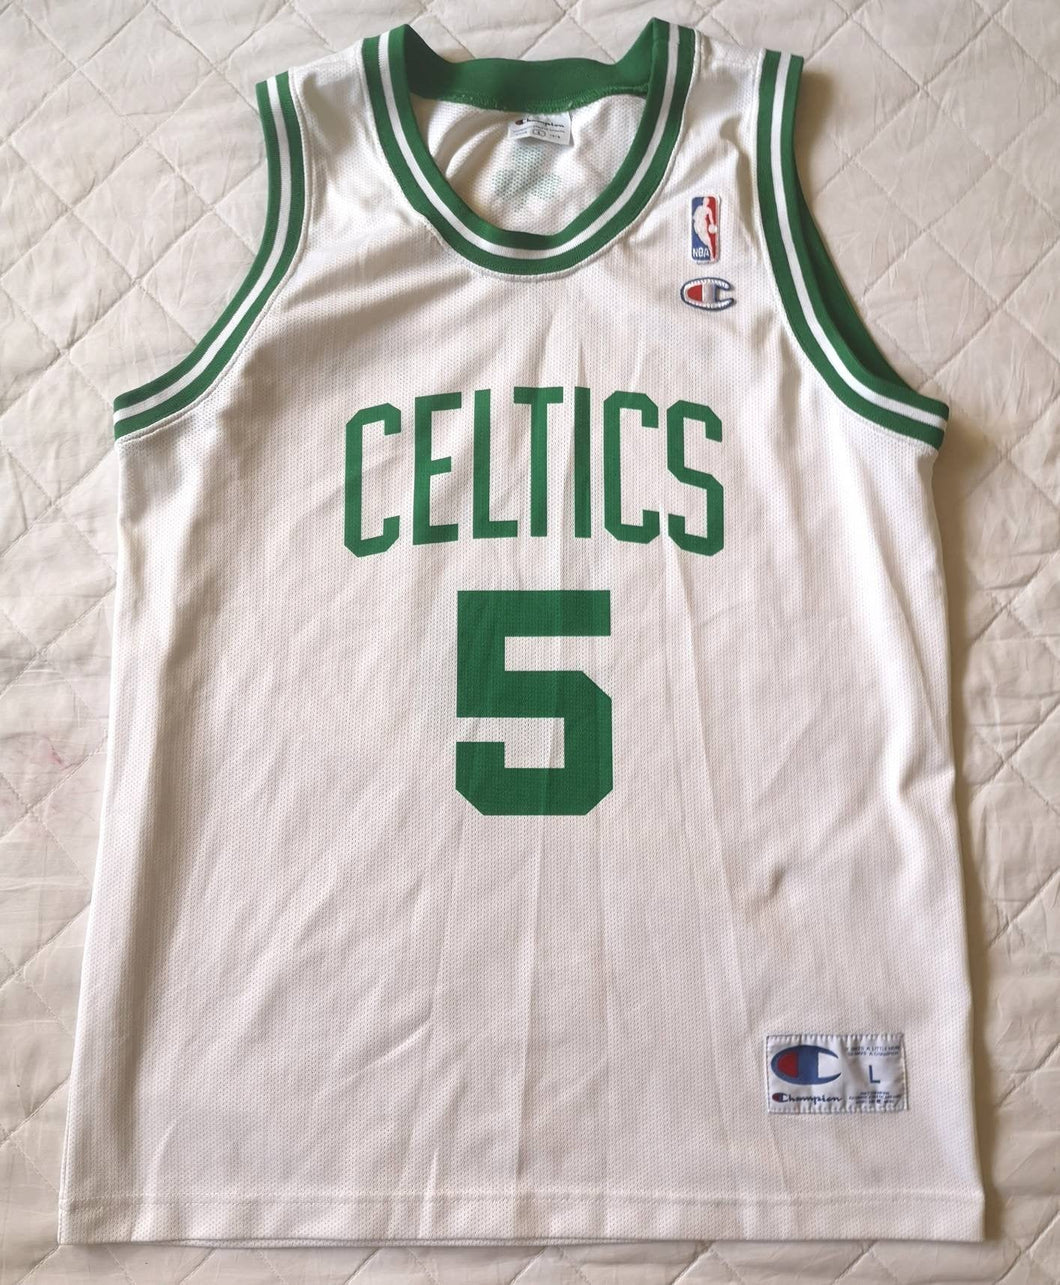 Authentic jersey Kevin Garnett Celtics 1990's Vintage Champion